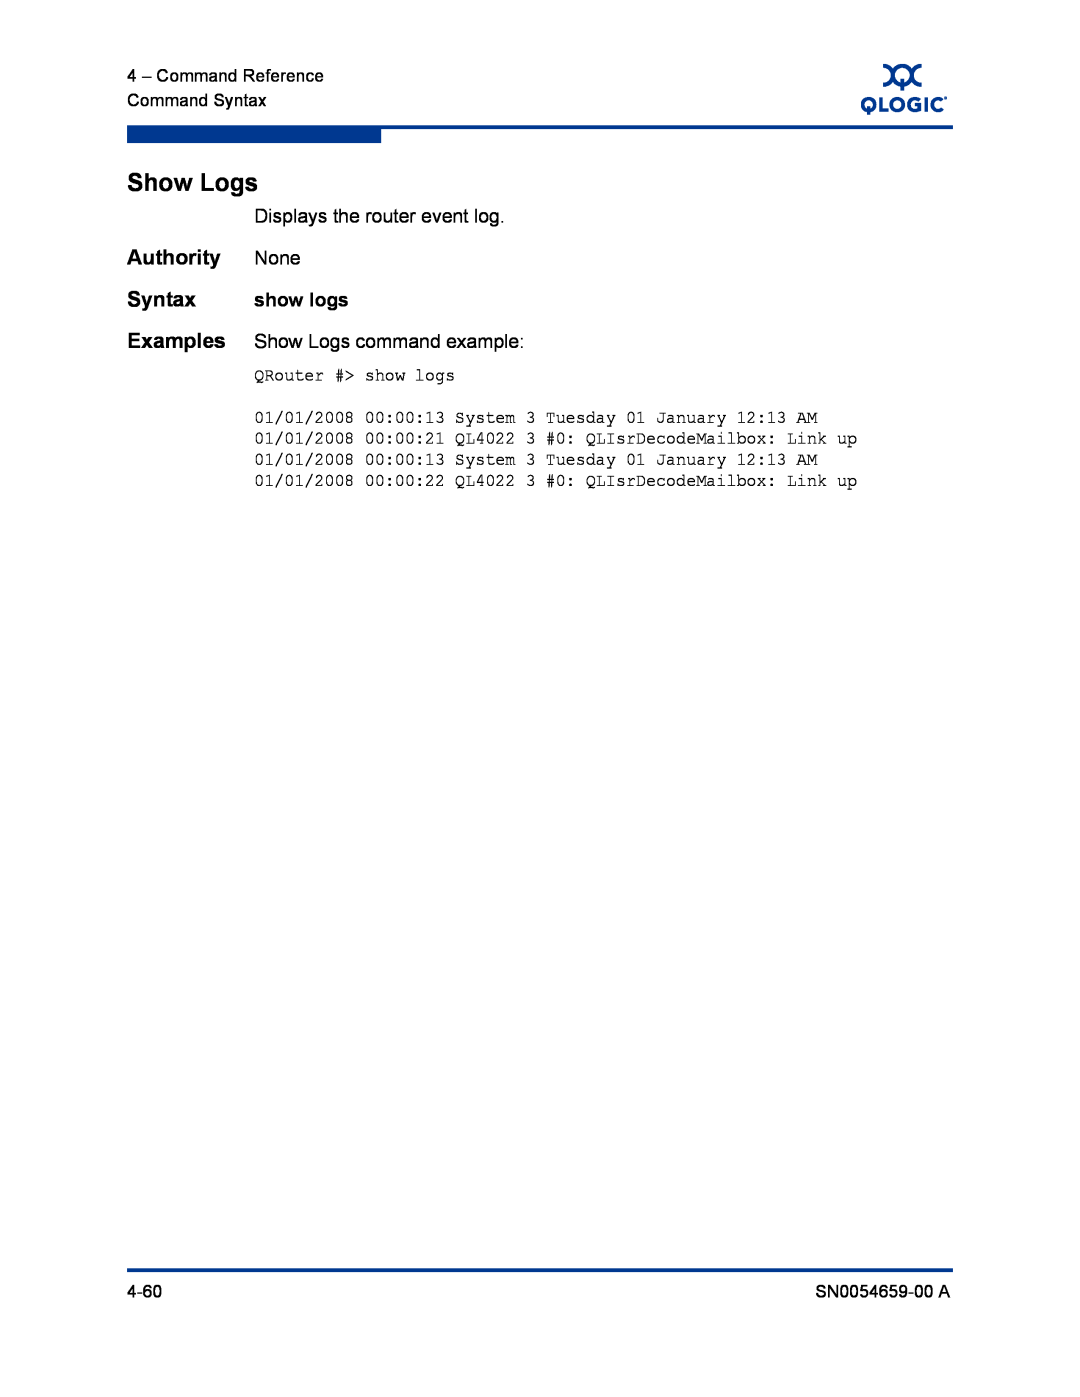 Q-Logic ISR6142 manual Show Logs, Authority None, Syntax, show logs 